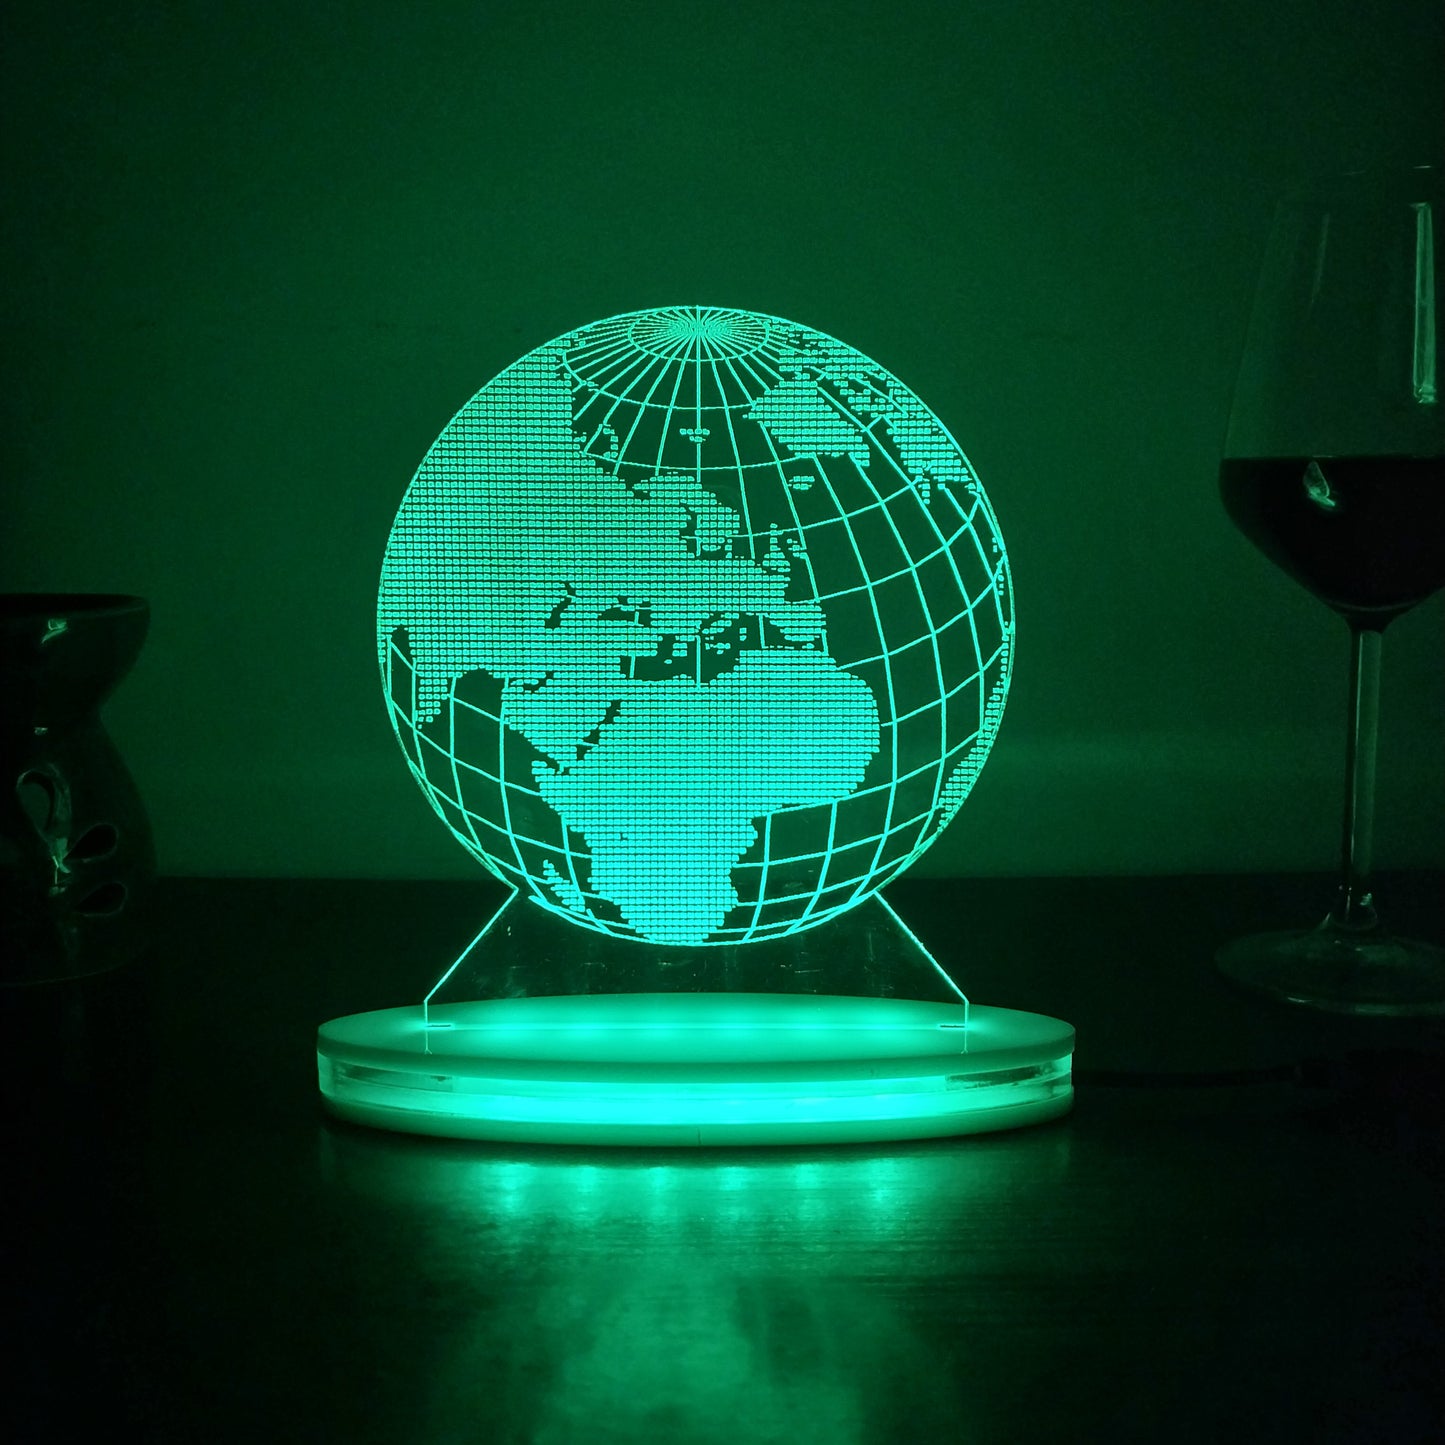 Globe Multicolor Acrylic 3D Illusion Lamp with Remote